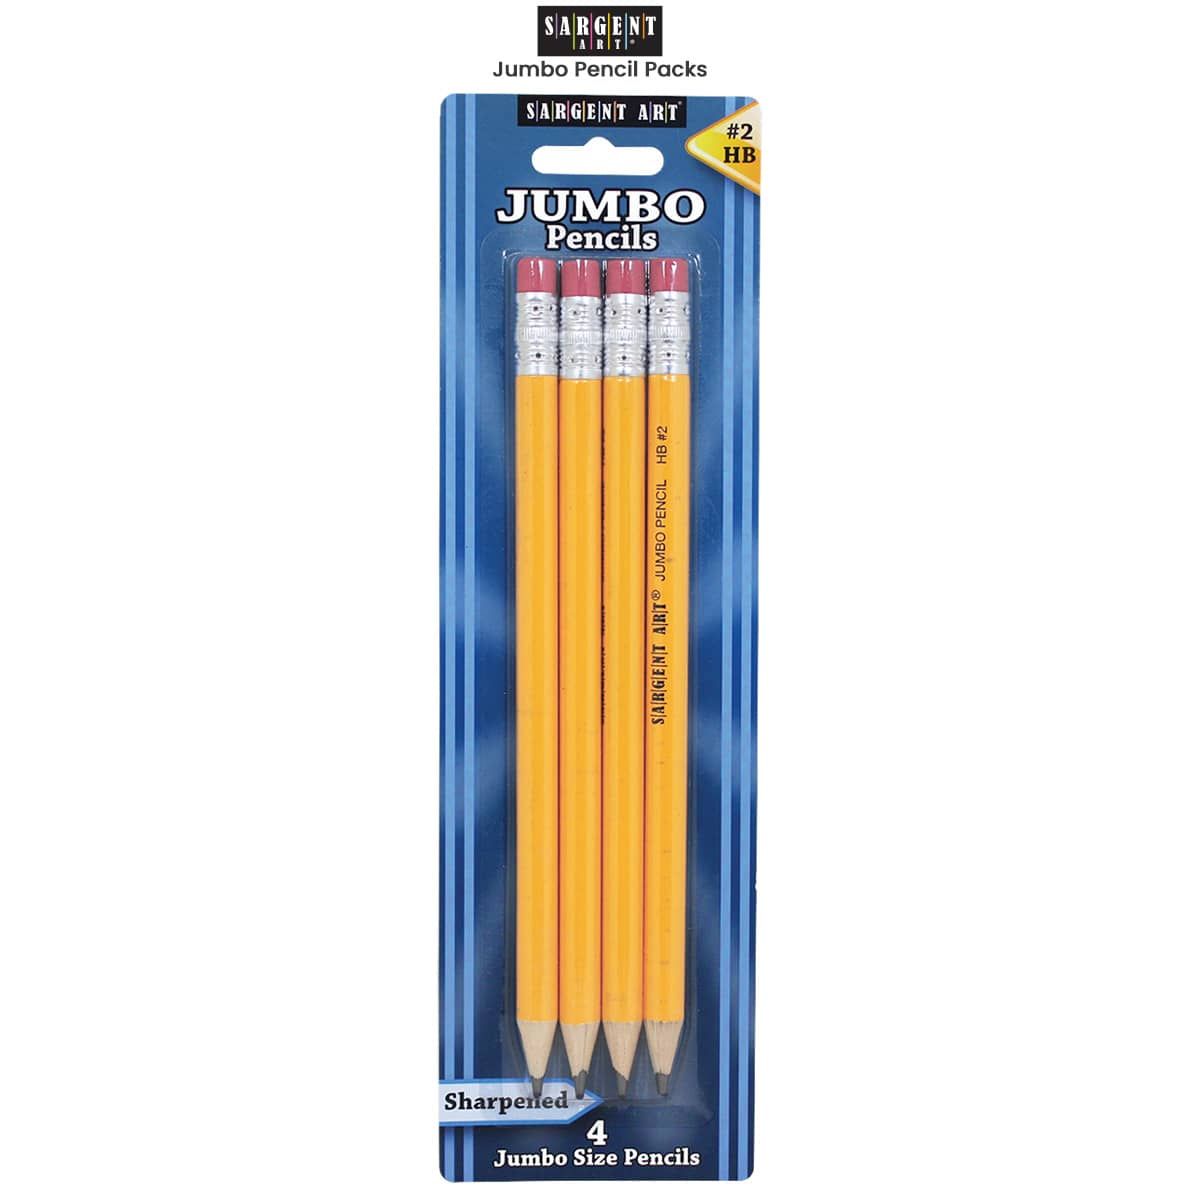 Sargent Art Jumbo Pencil Packs